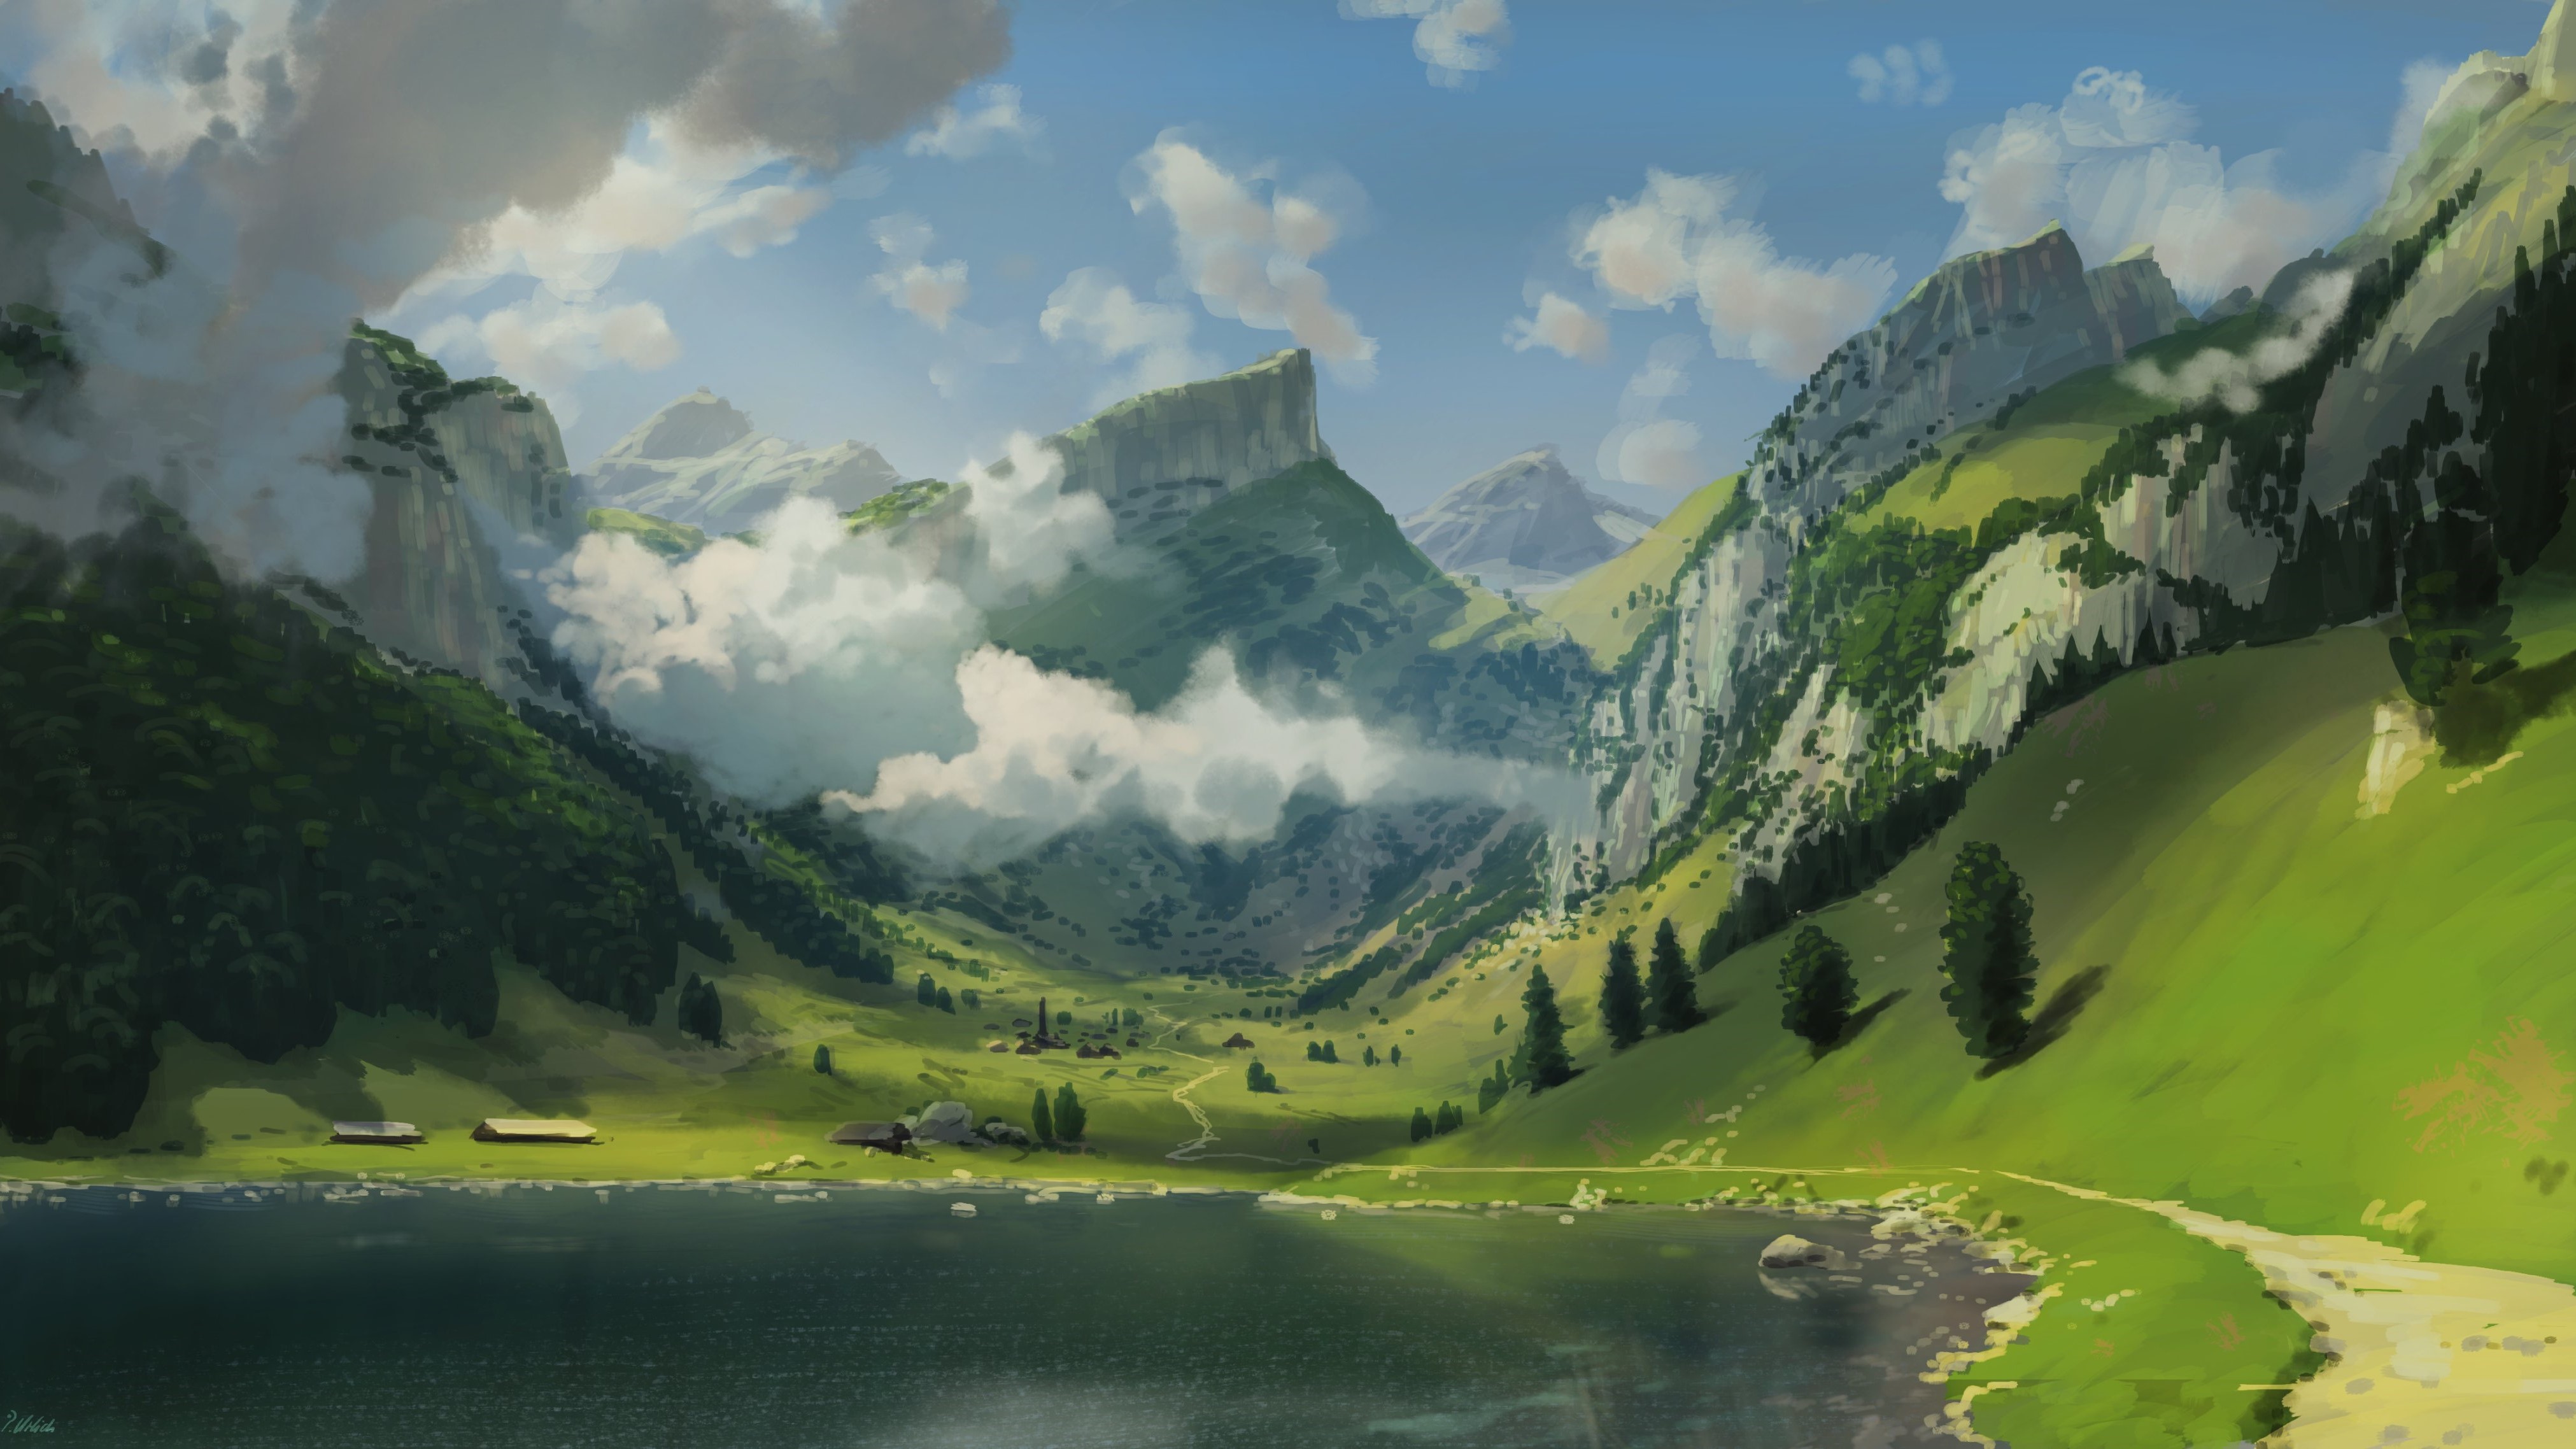 Lake Clouds Scenery Digital Art Artwork Philipp A Ulrich Mountains 4046x2276